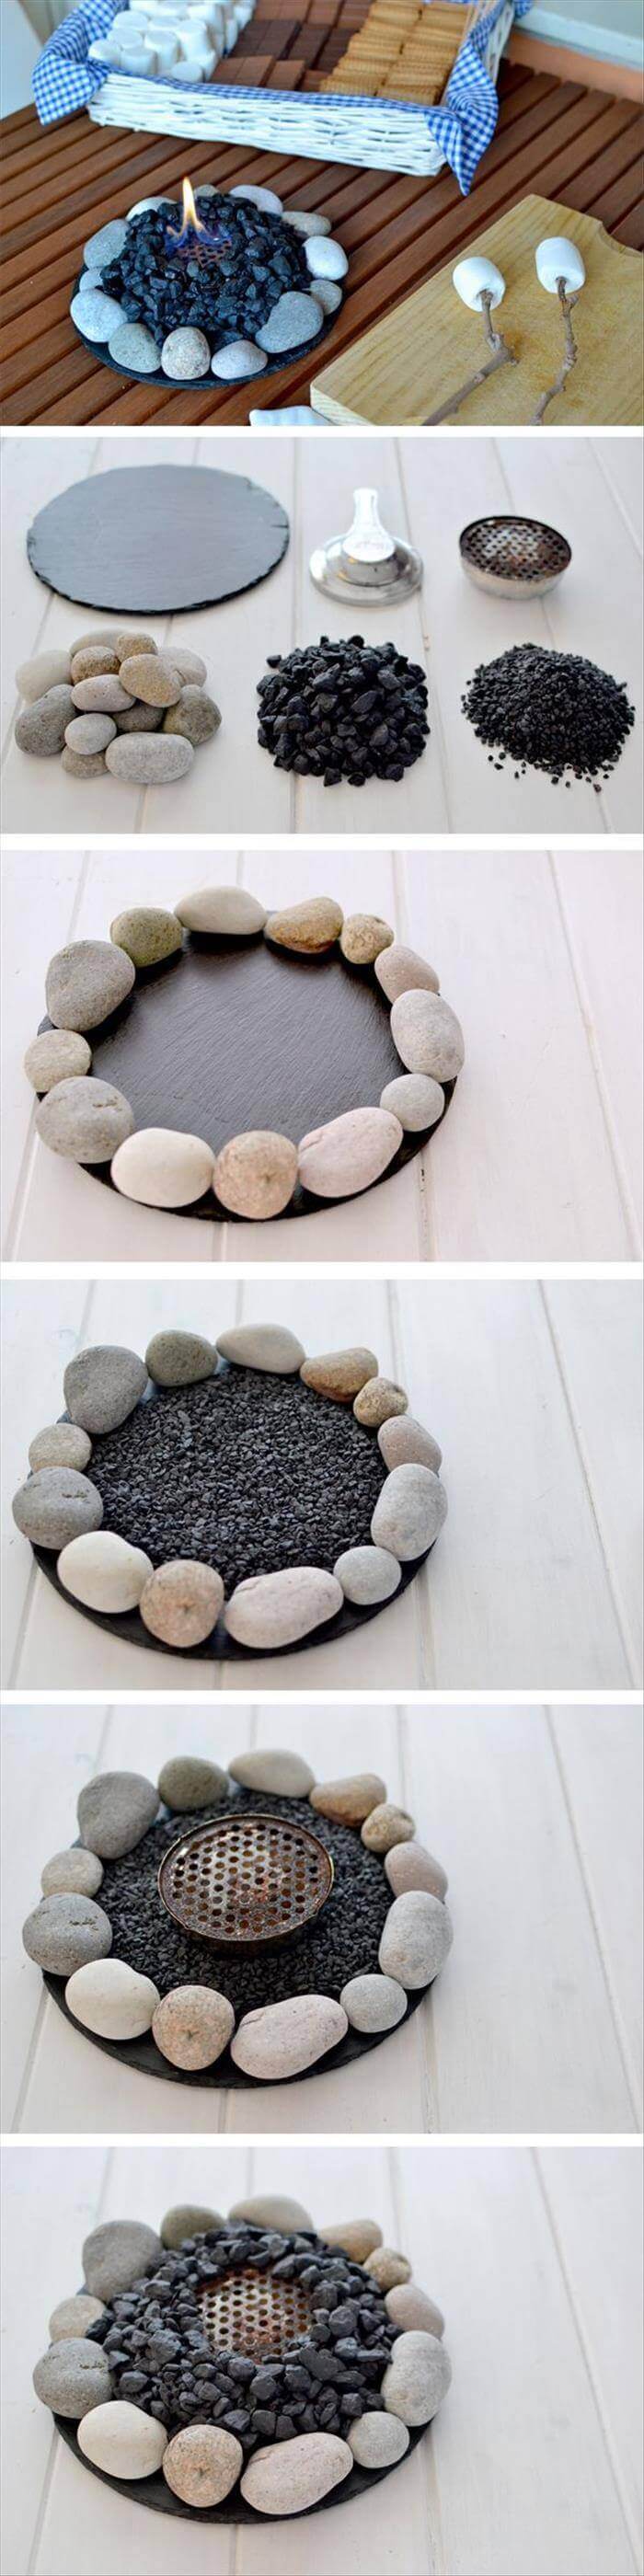 15 diy home decor ideas pebbles river rocks homebnc.jpg